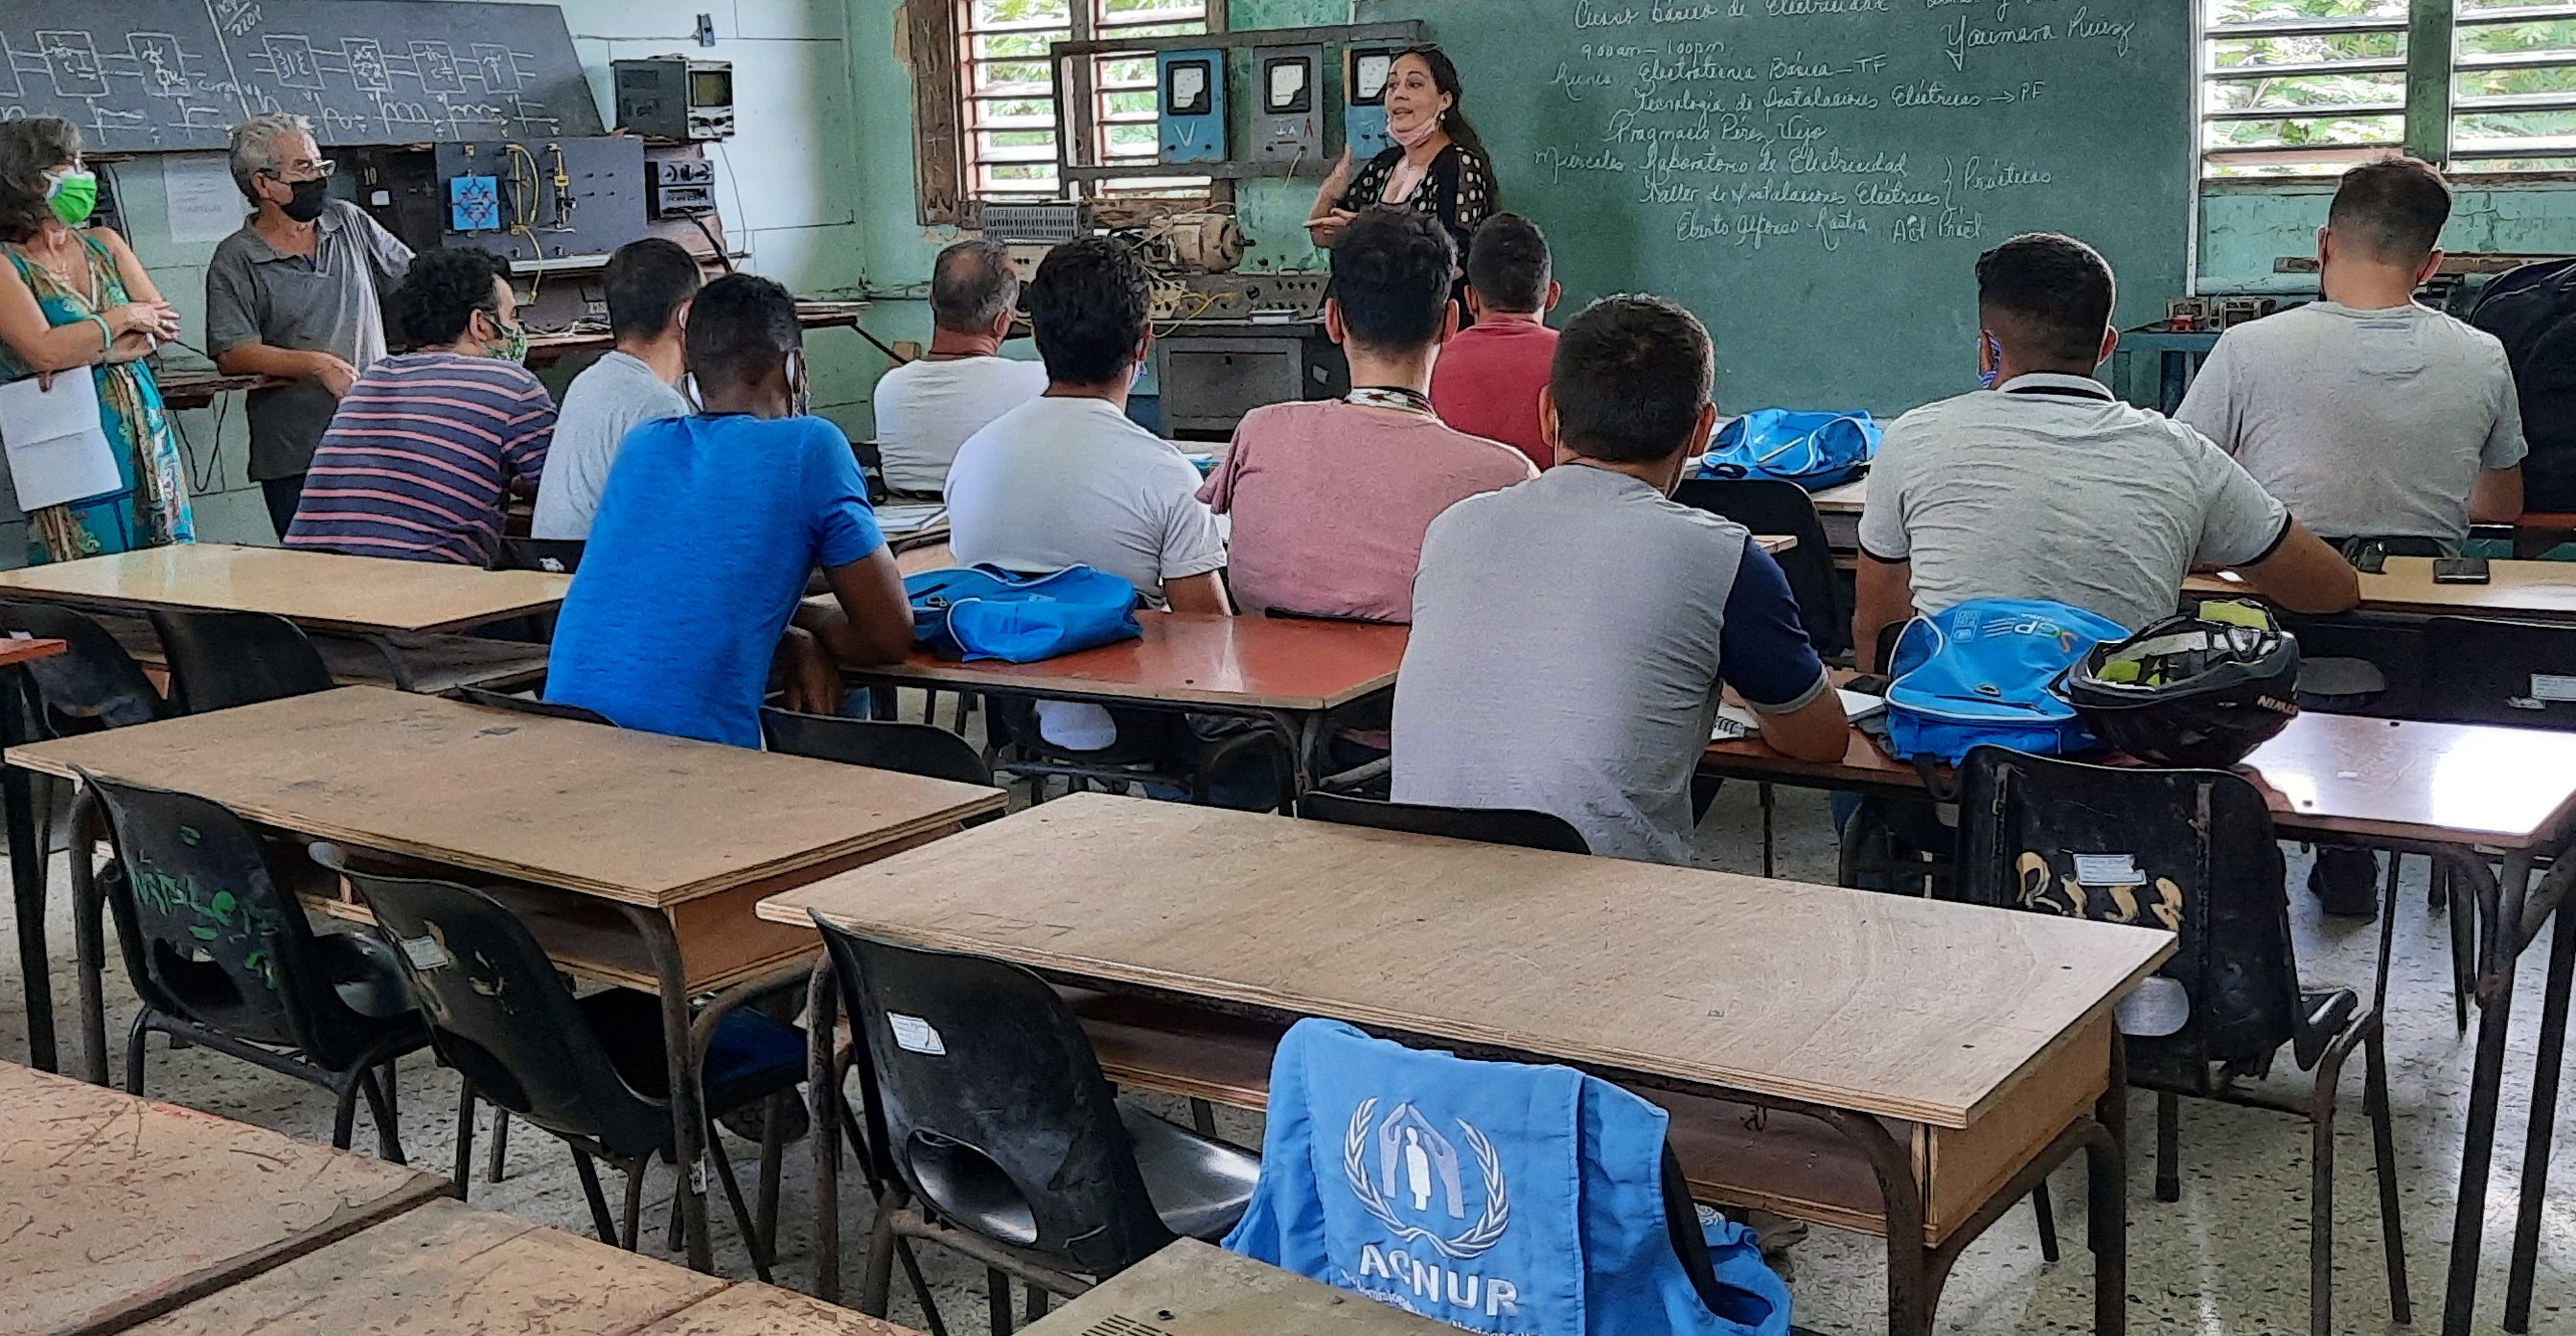 Para no dejar a nadie atrás: cursos de español para personas refugiadas y solicitantes de asilo